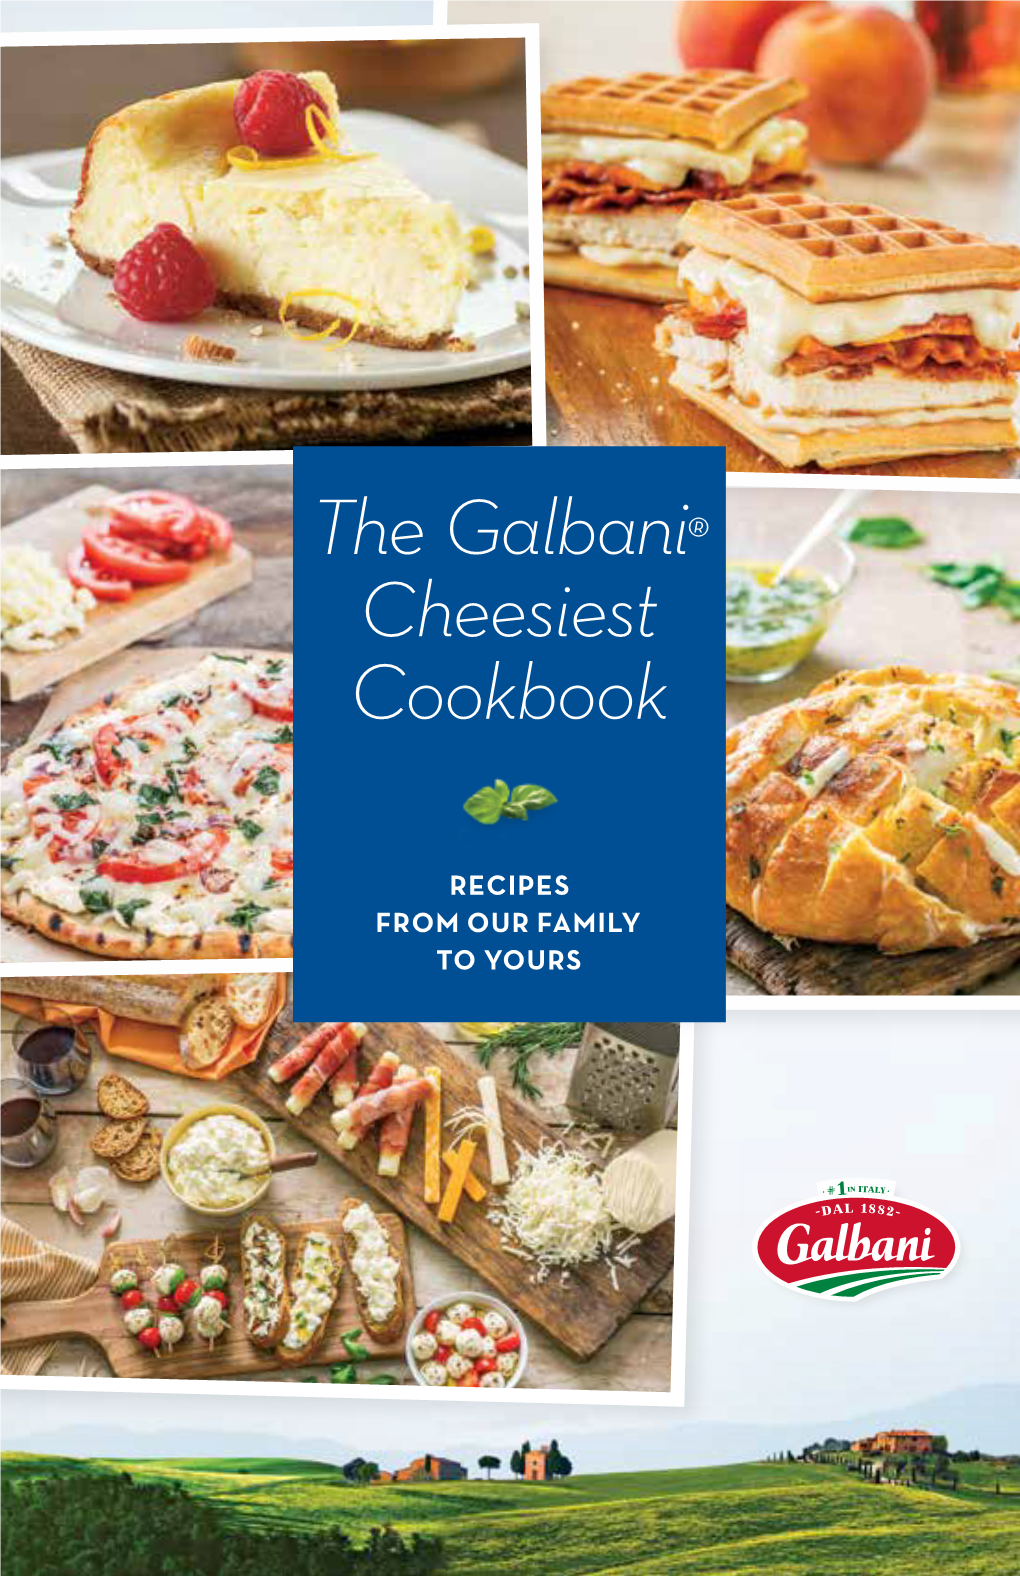 The Galbani® Cheesiest Cookbook